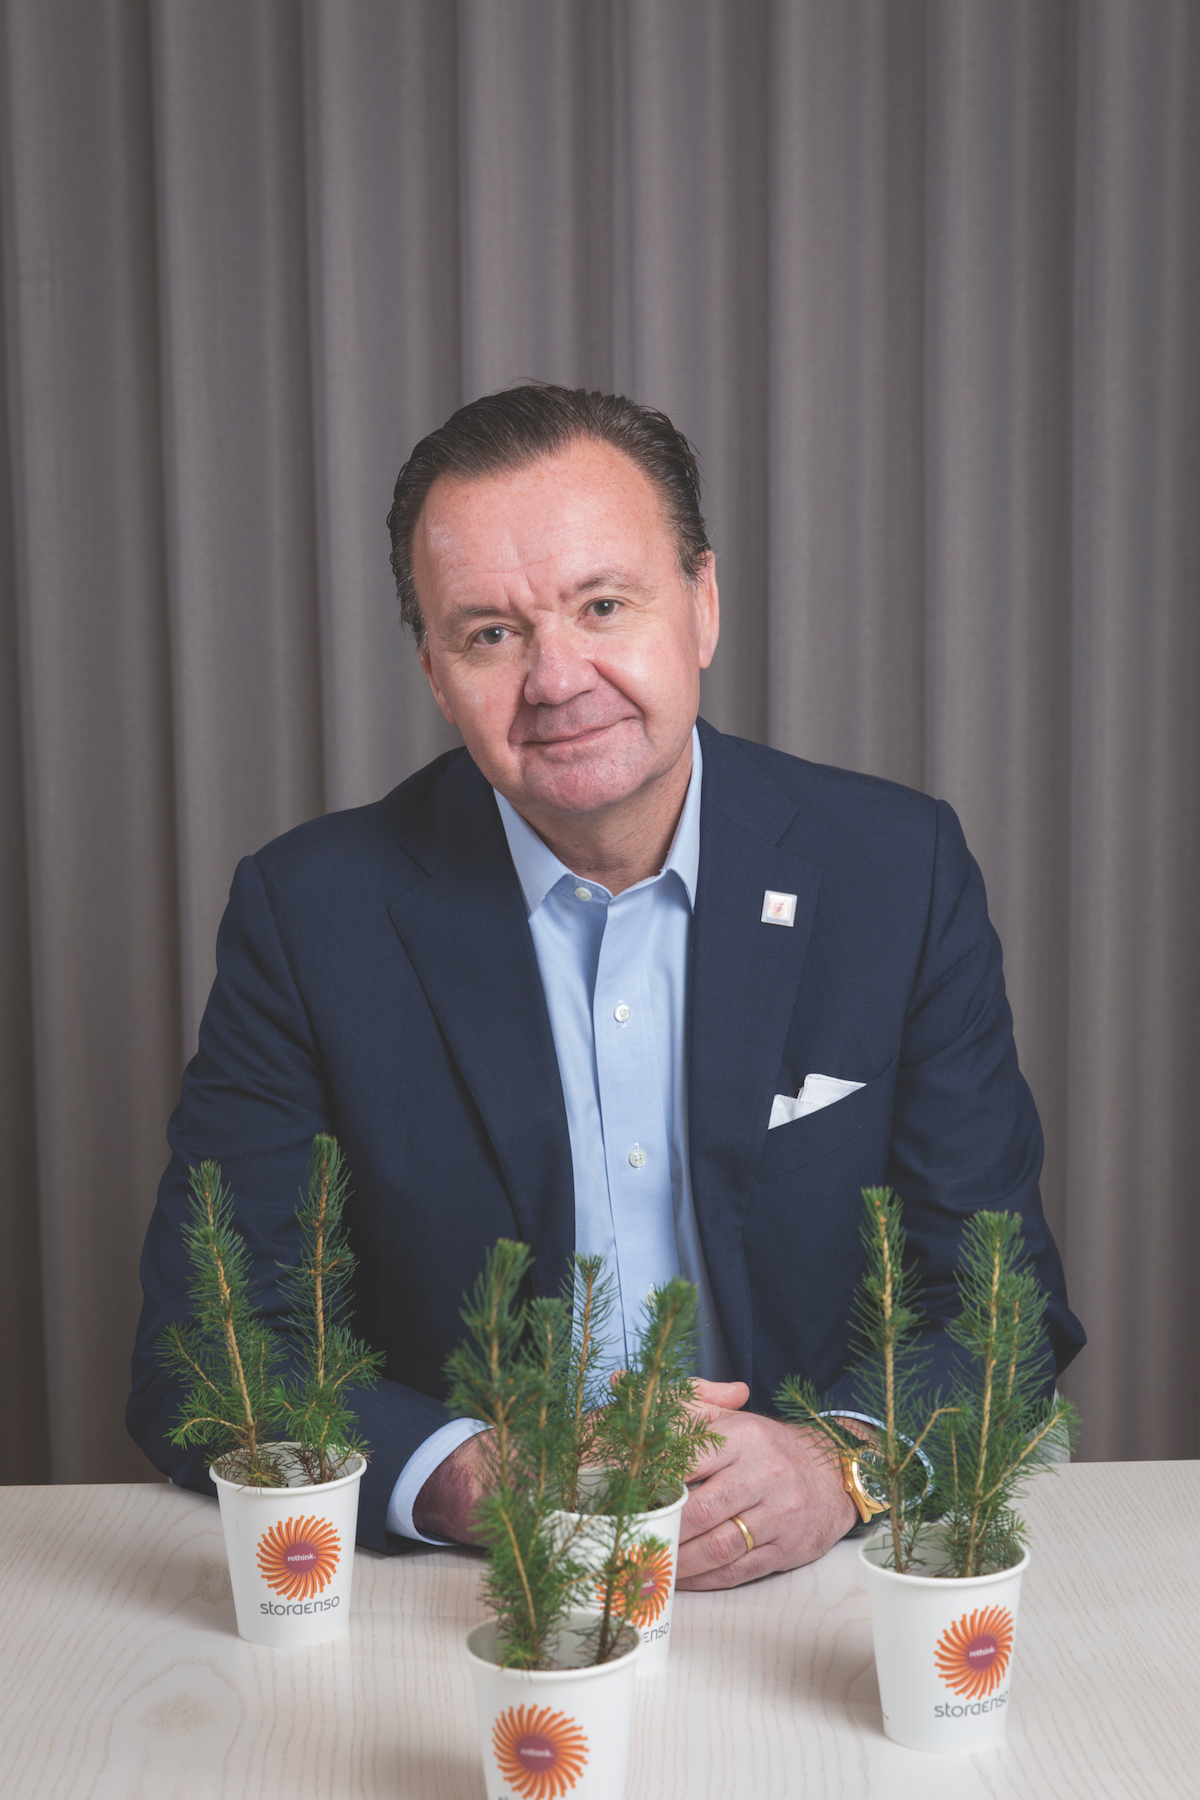 Karl-Henrik Sundström, CEO of Stora Enso